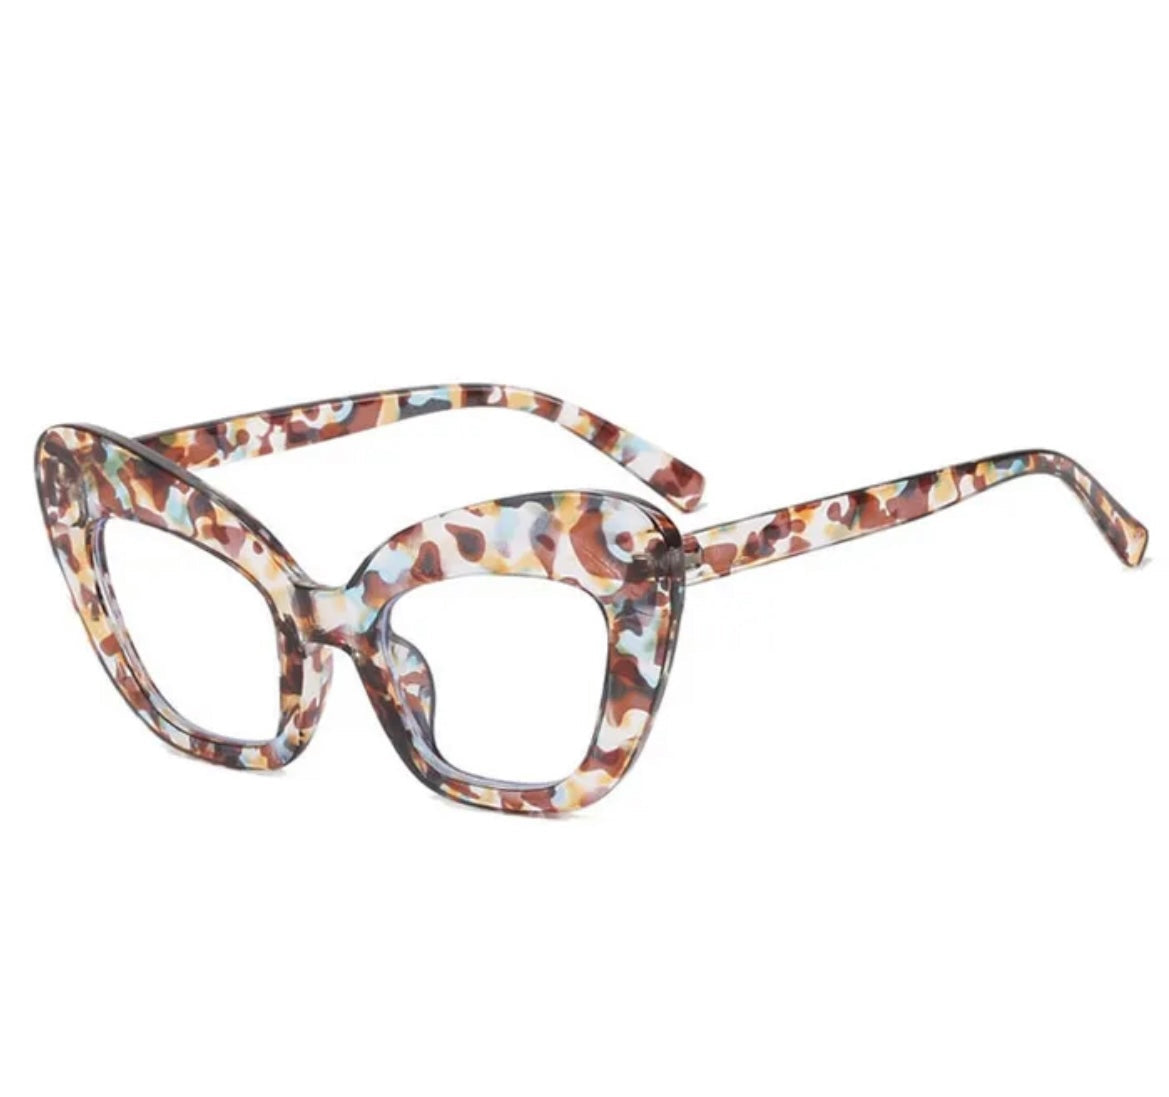 Speckled Fashion Glasses